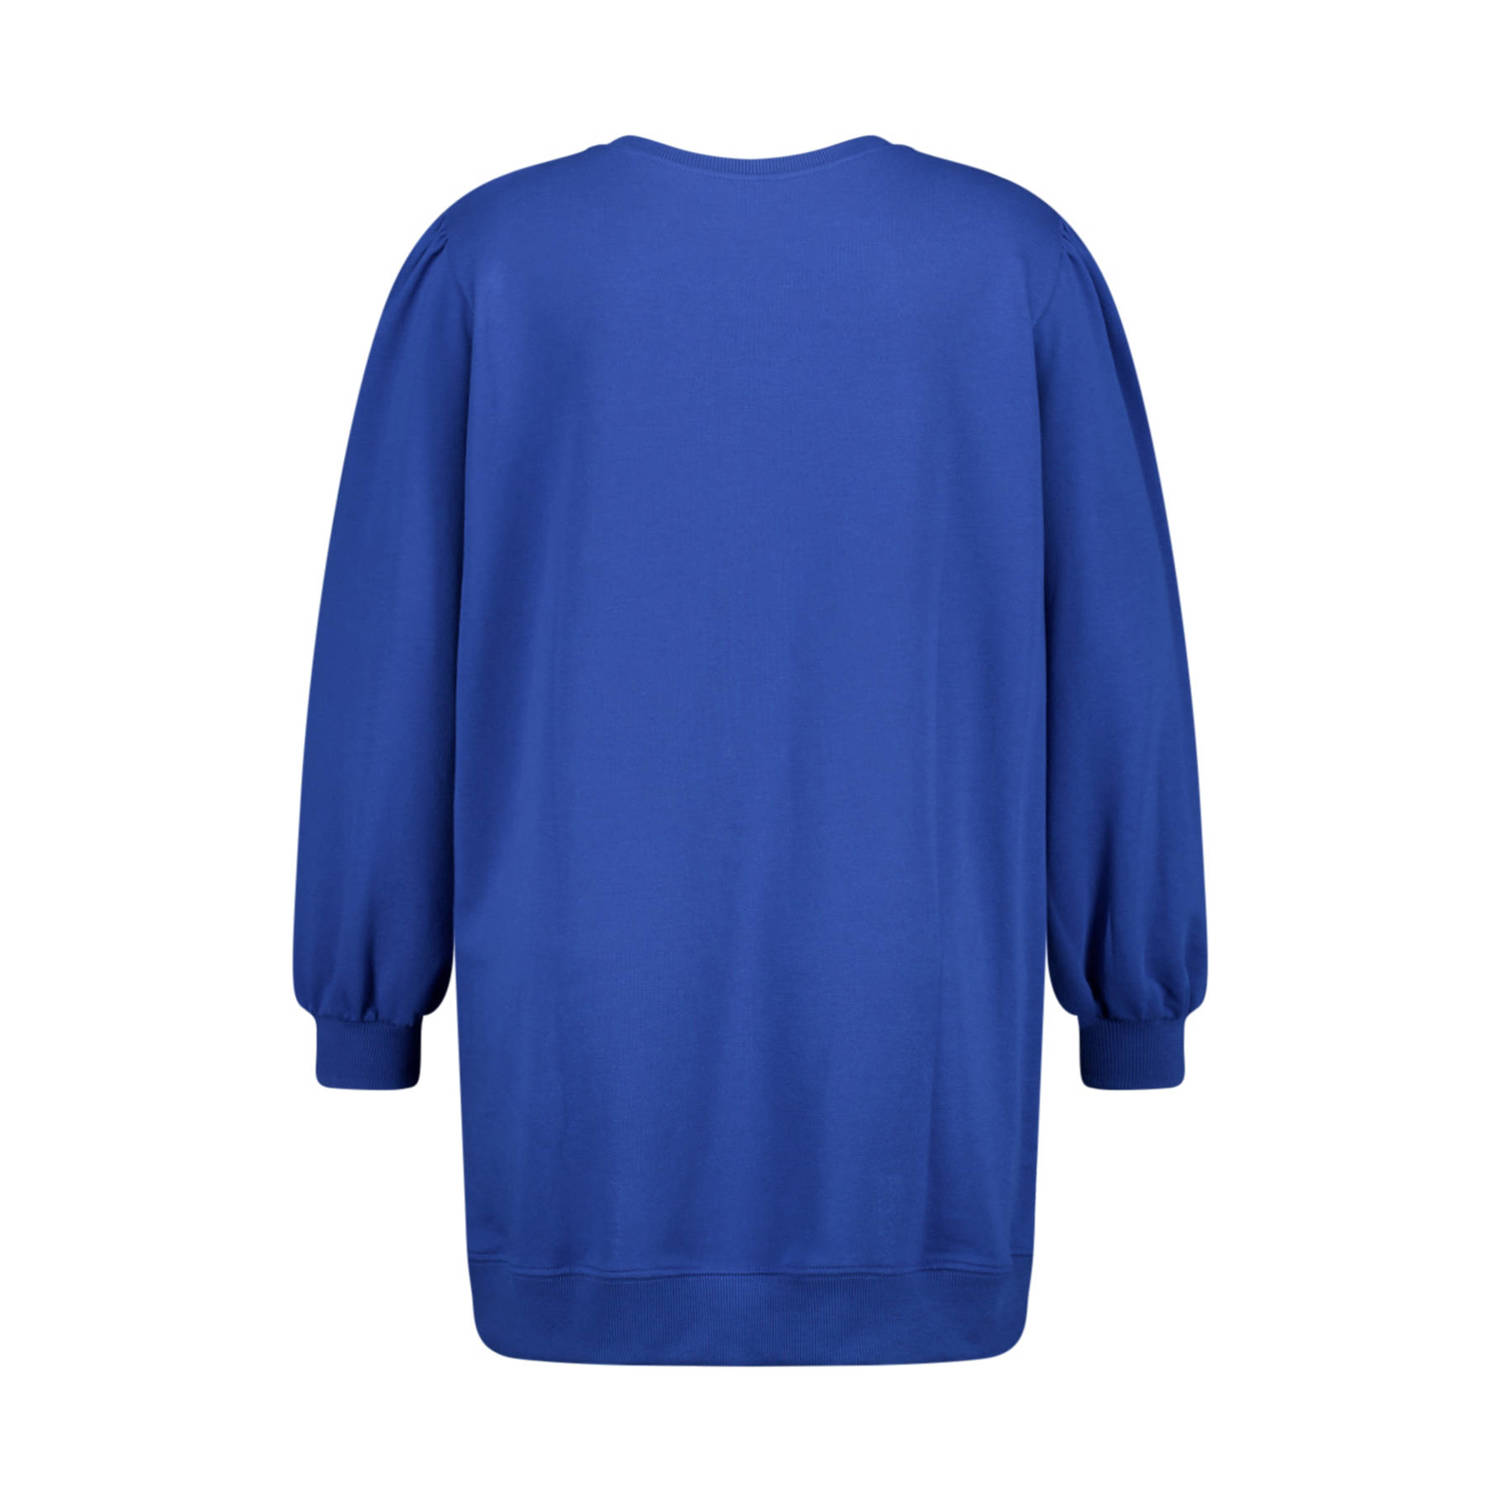 MS Mode sweater kobalt blauw